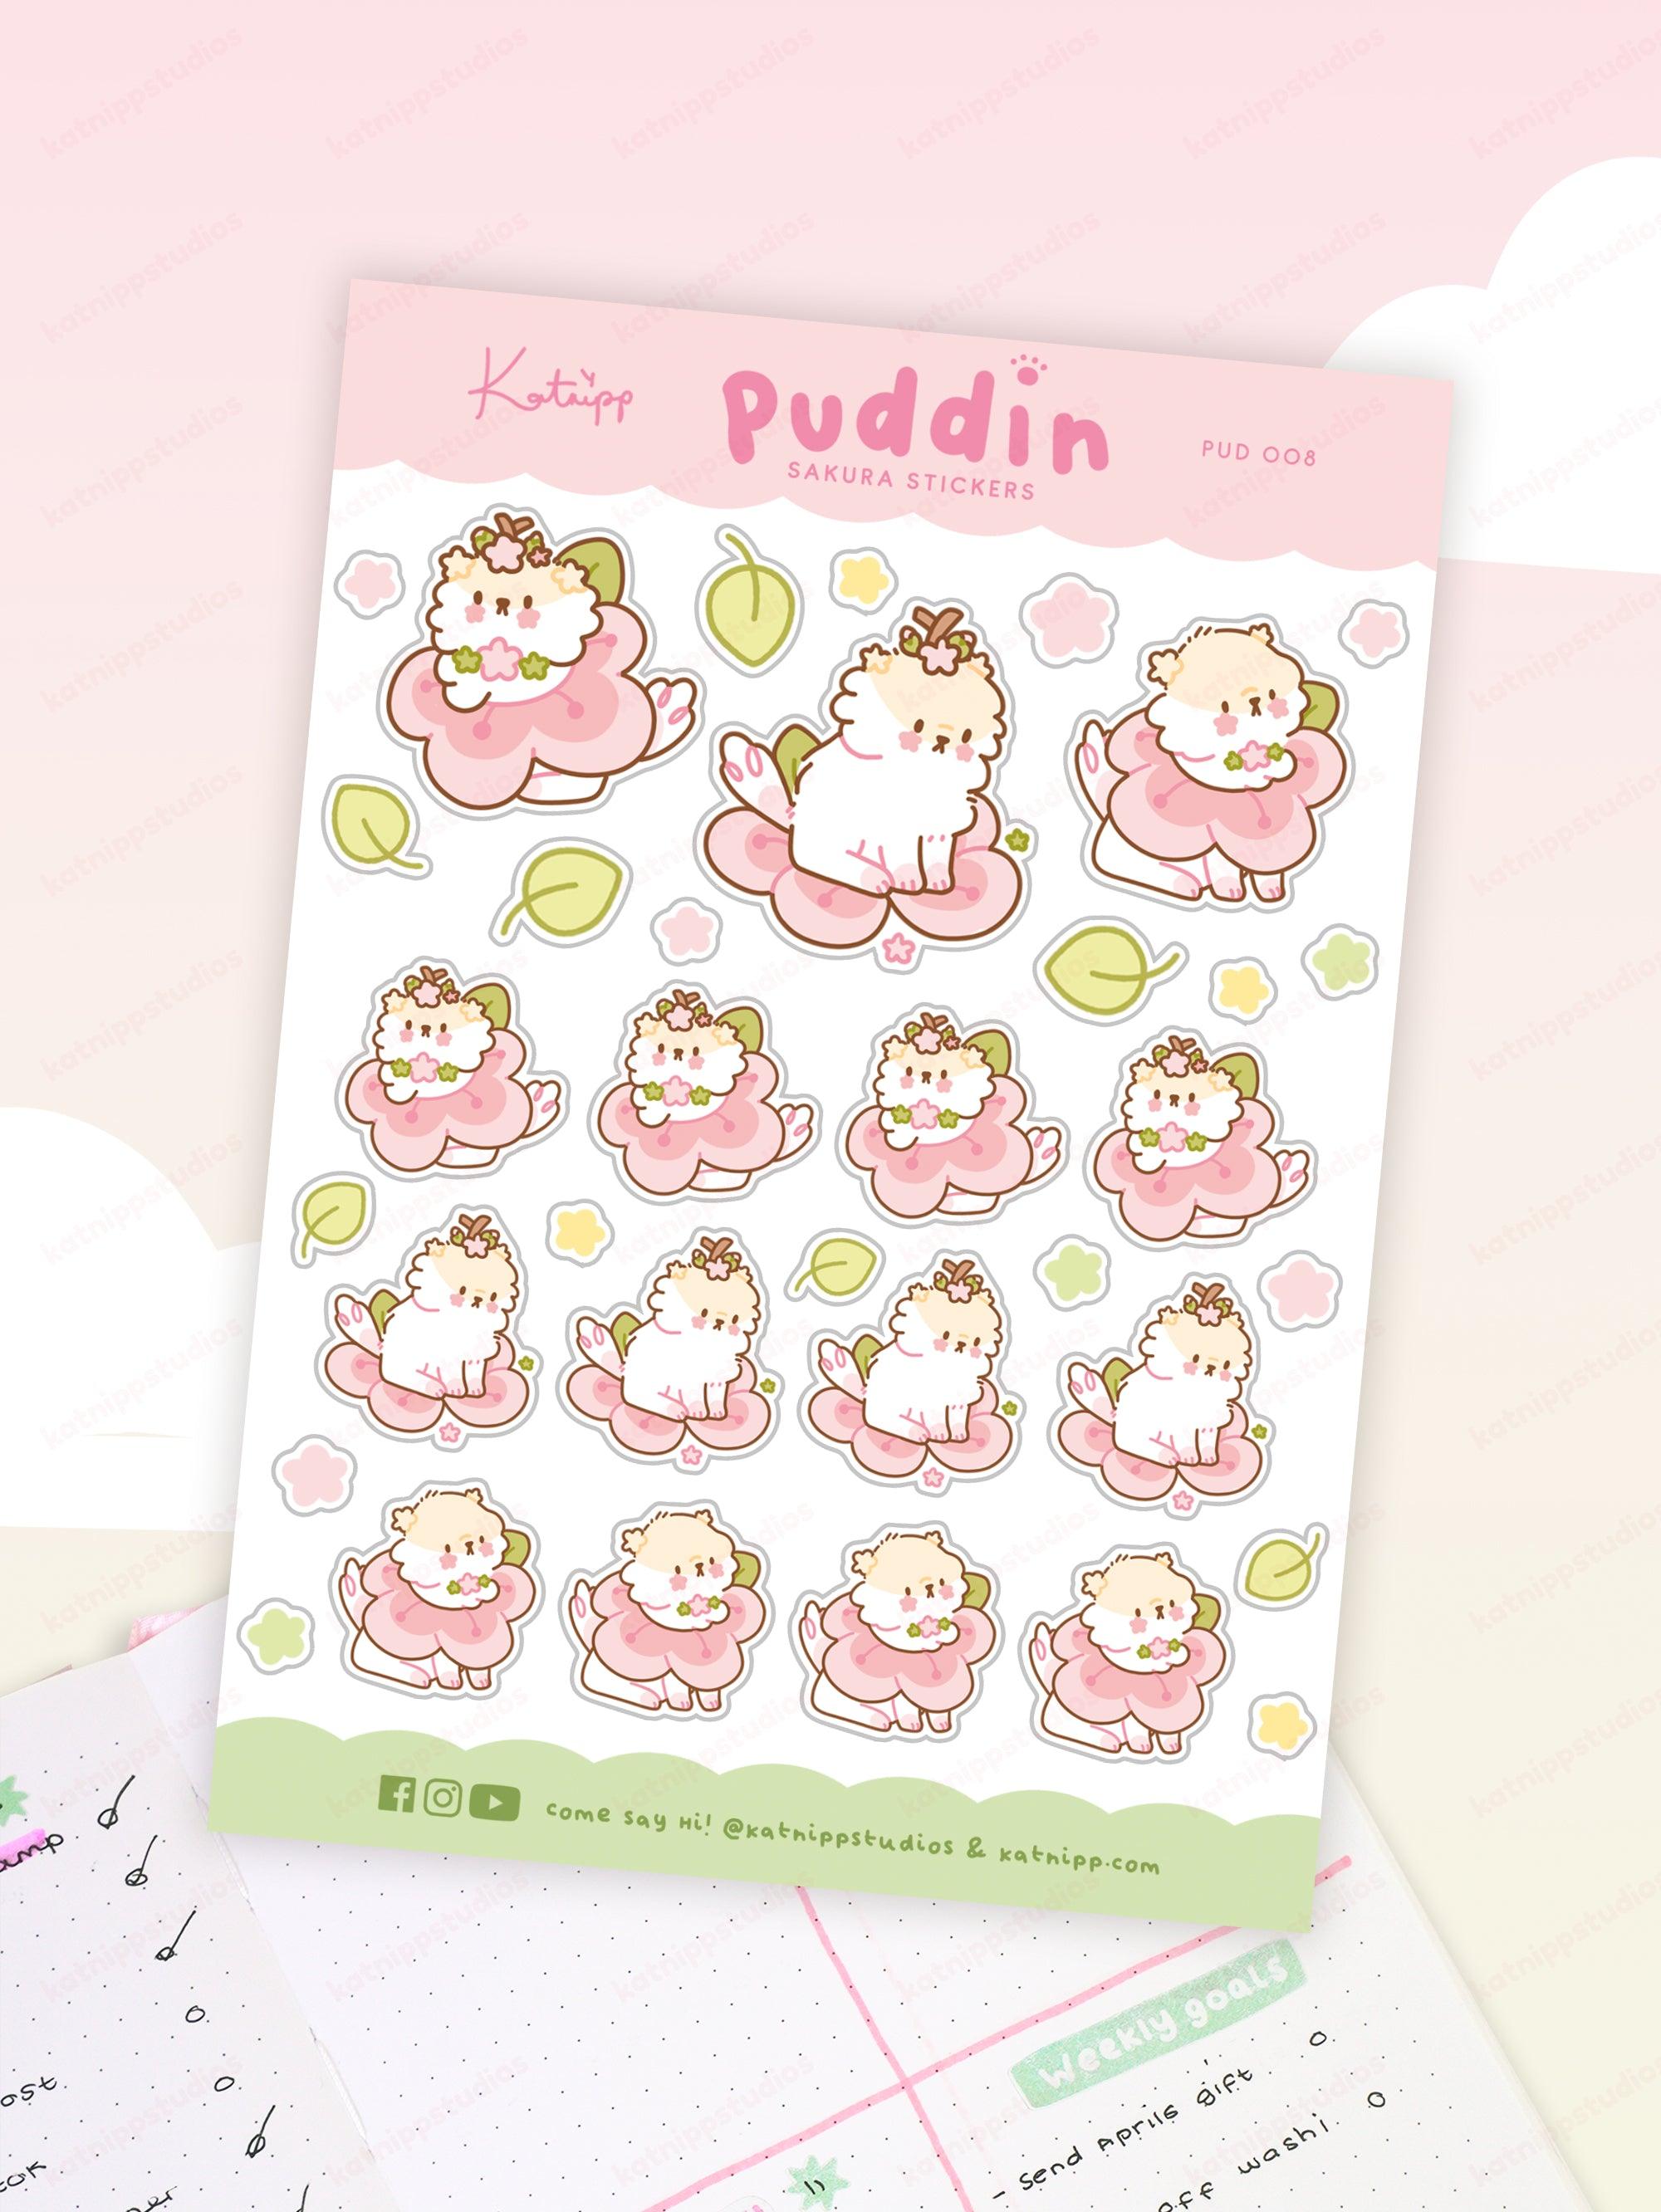 Puddin the Dog Sakura Planner Sticker - PUD 008 - Katnipp Studios